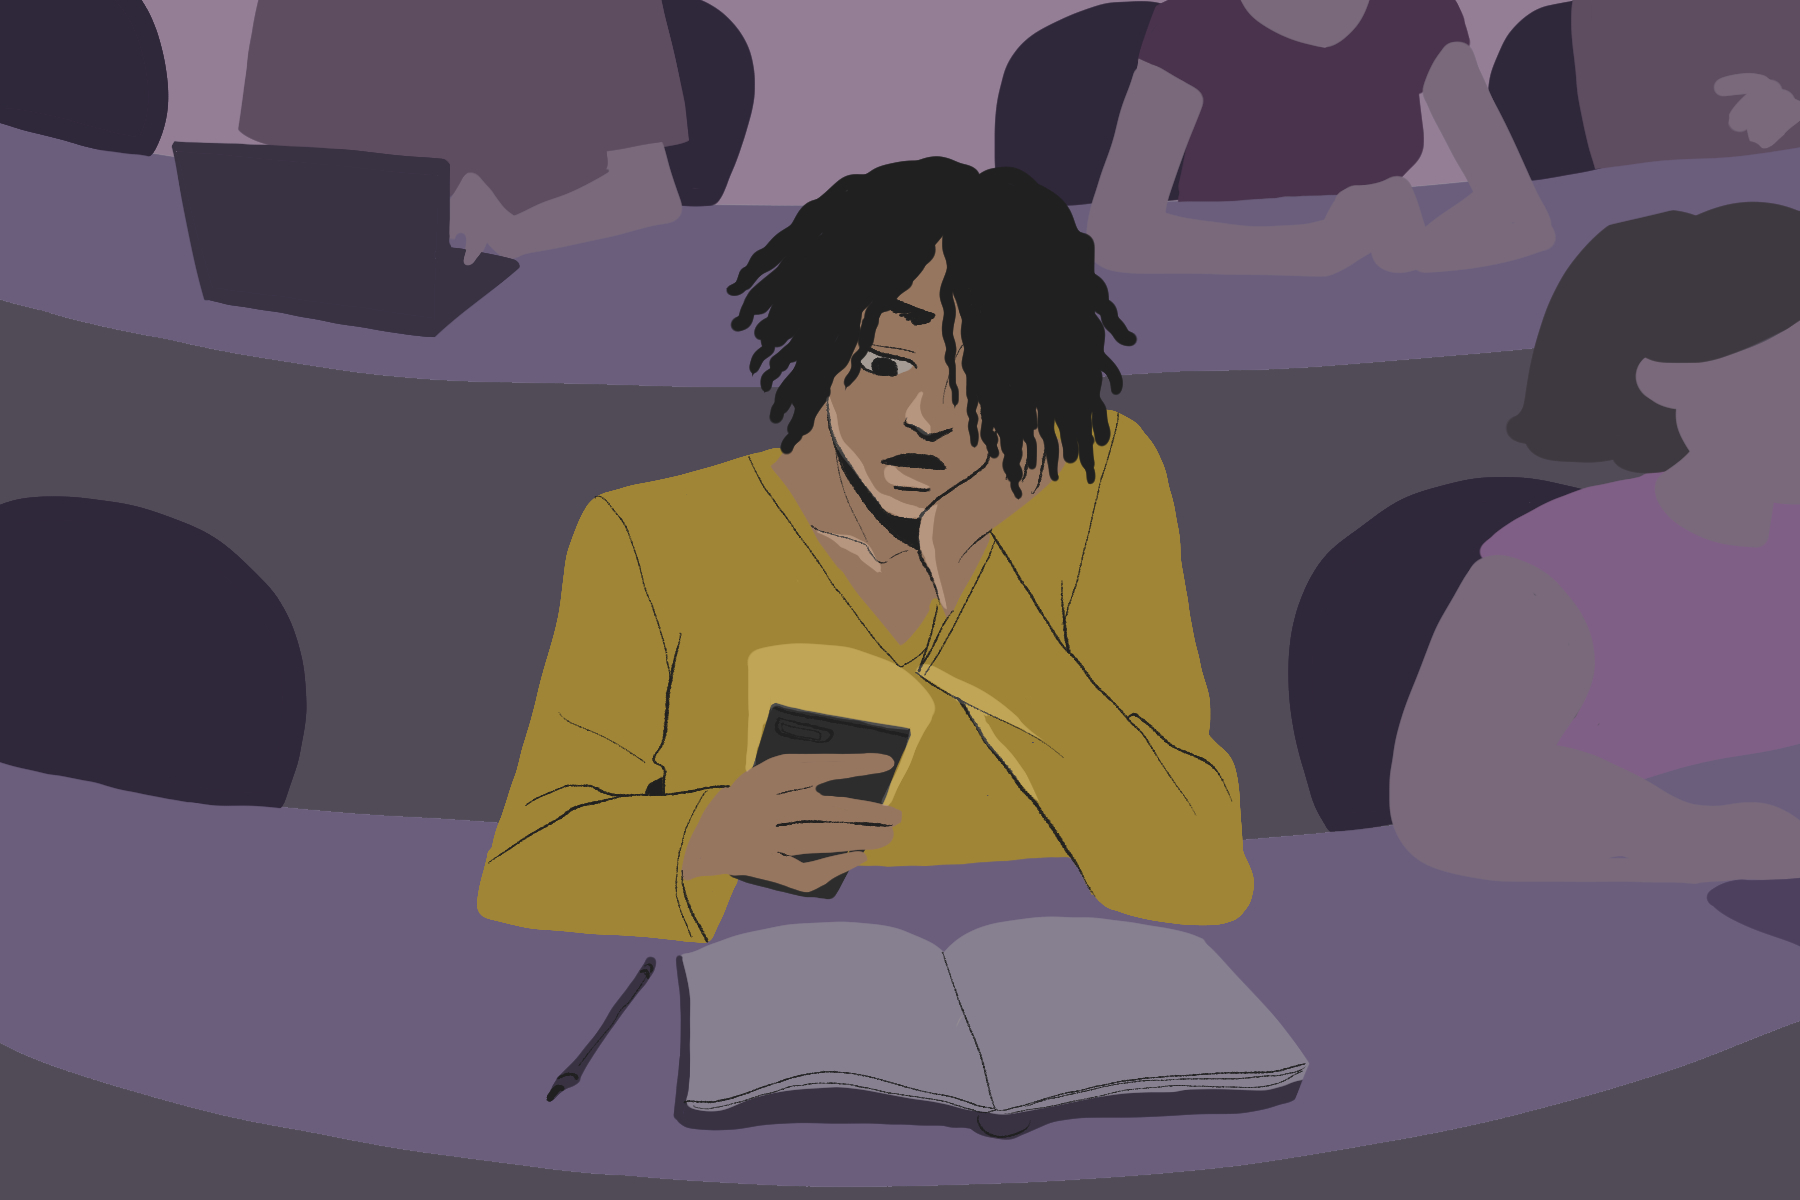 A person scrolling through social media while reading a book